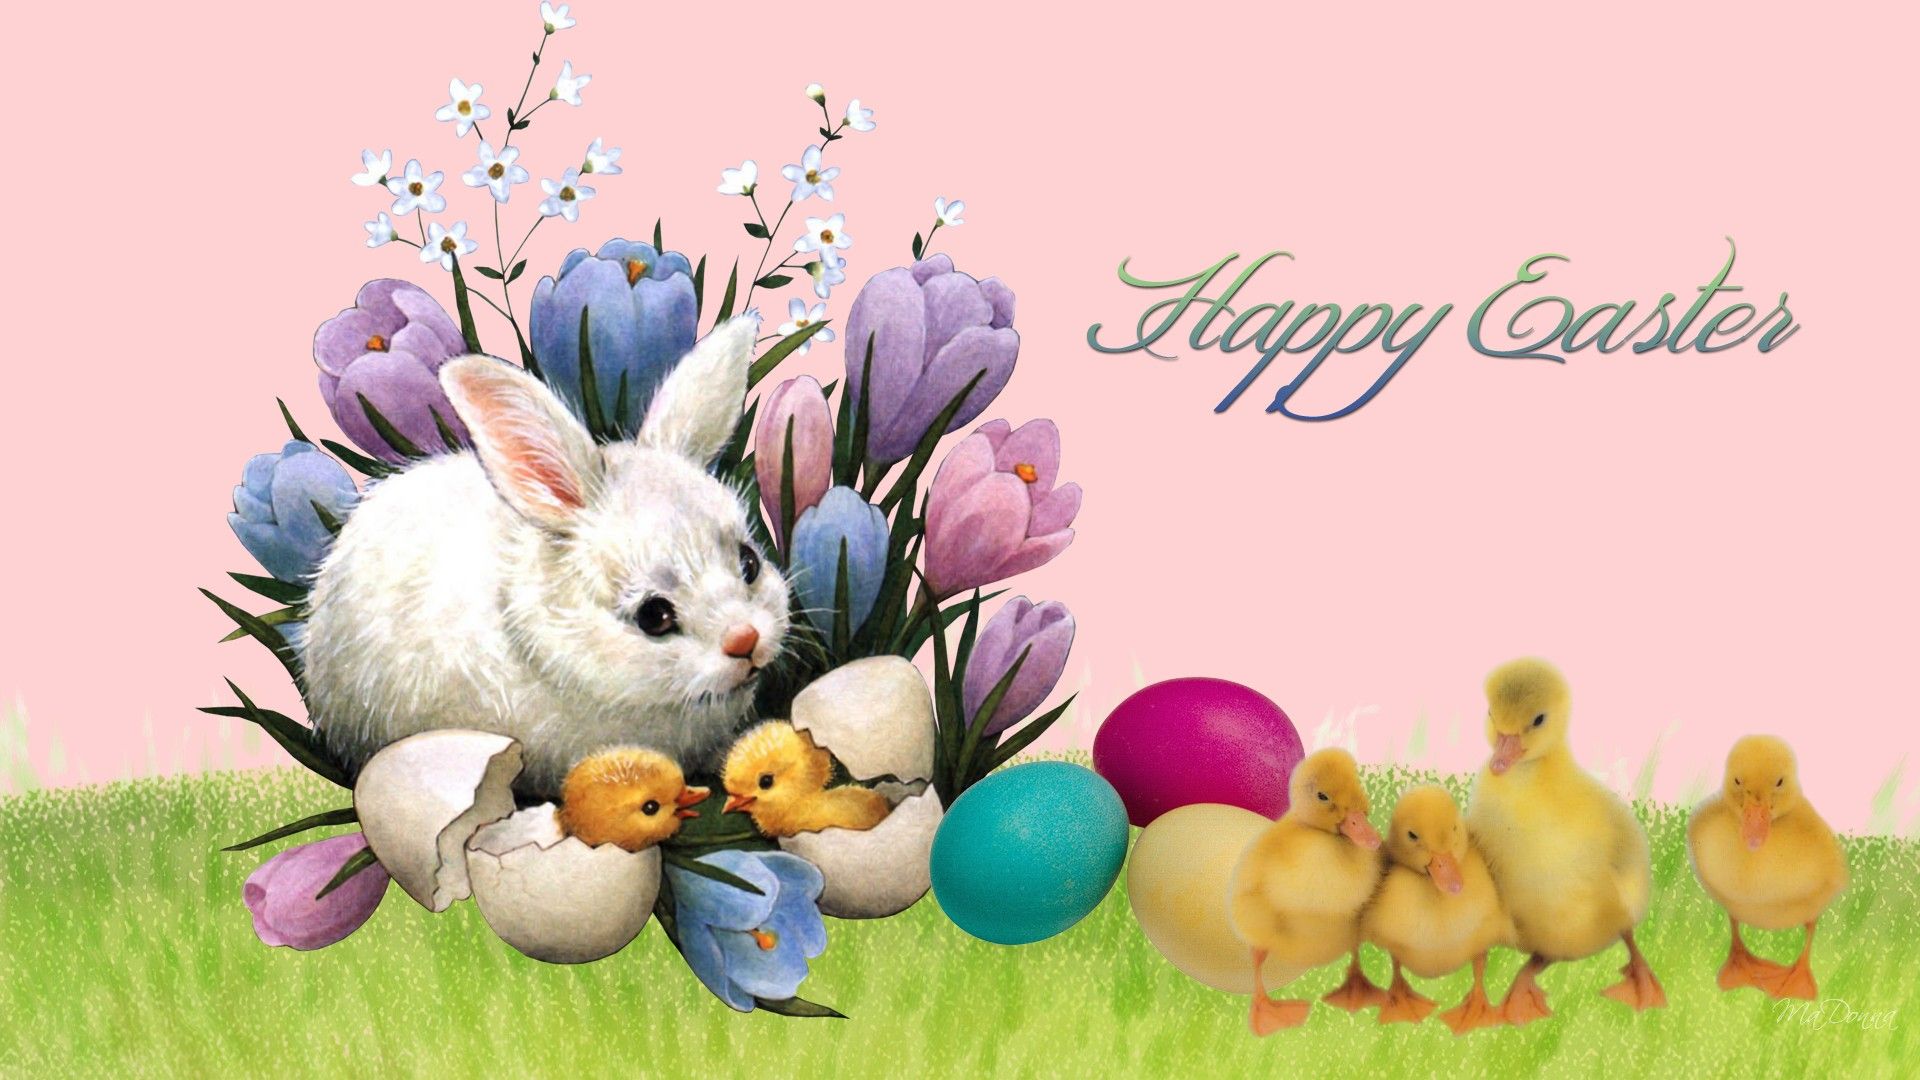 free wallpaper easter bunny rabbits Easter Bunny Friends carol